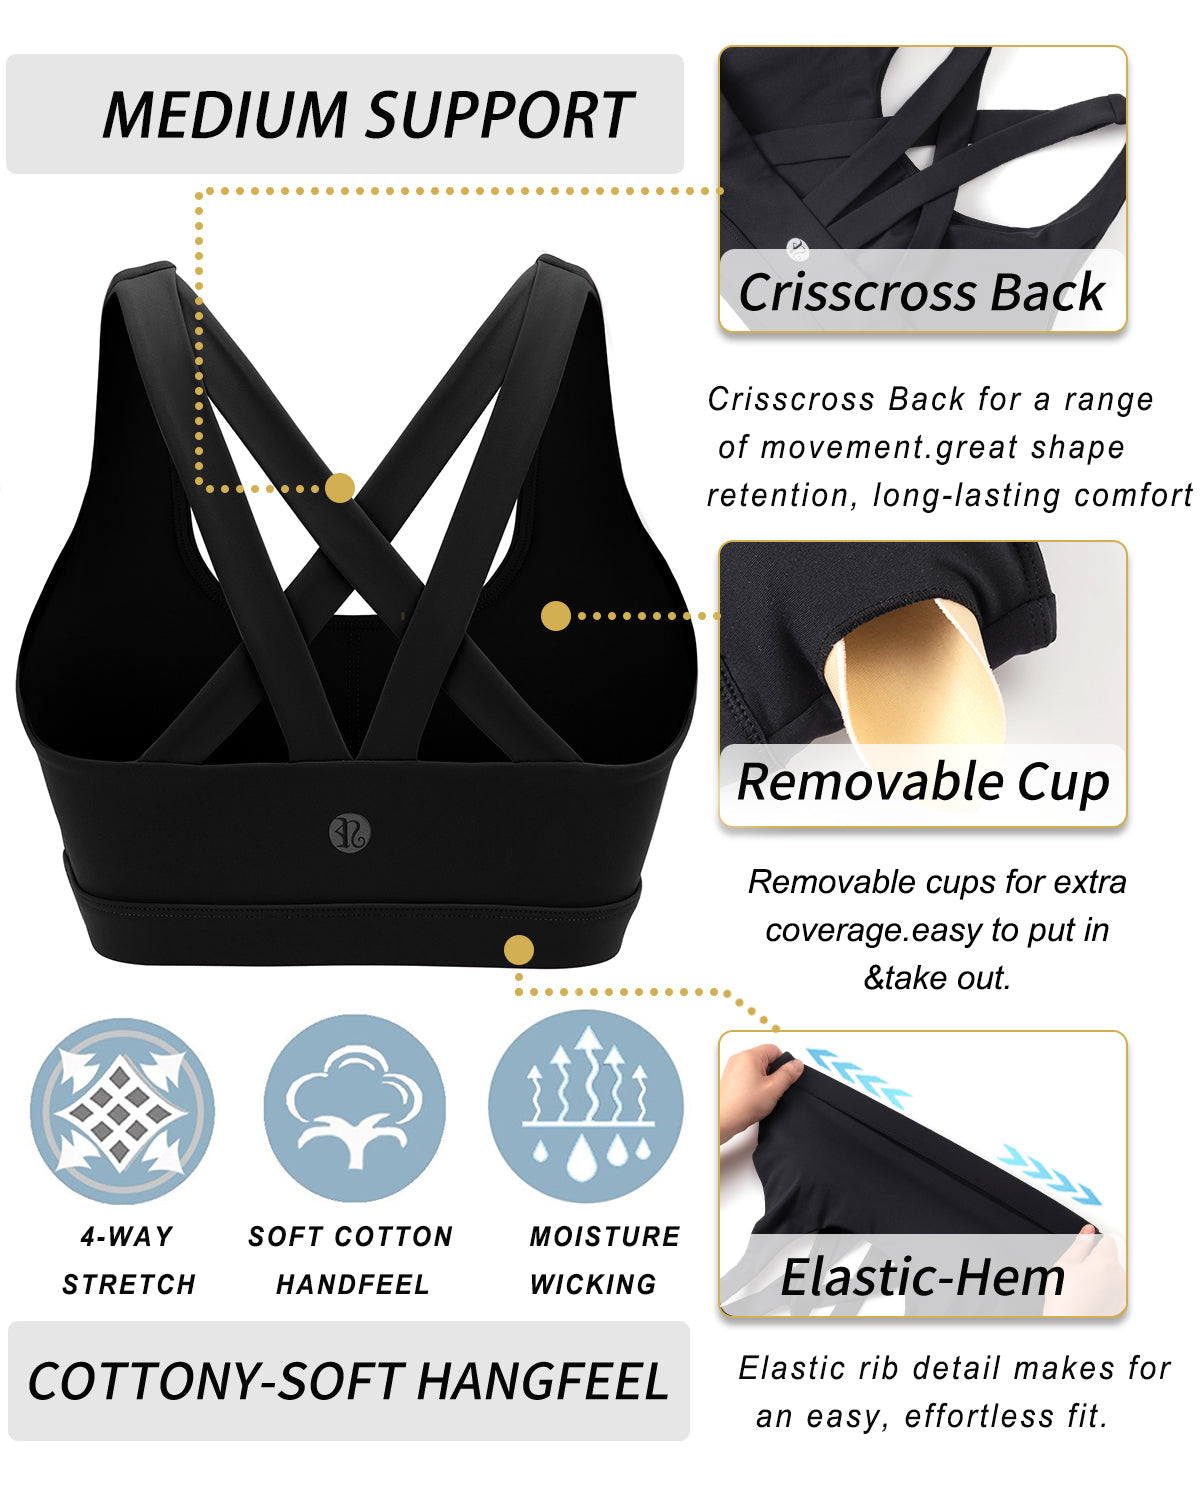 Breathable Softness Criscross Honeycomb Textured Wideband Waist Sports Set